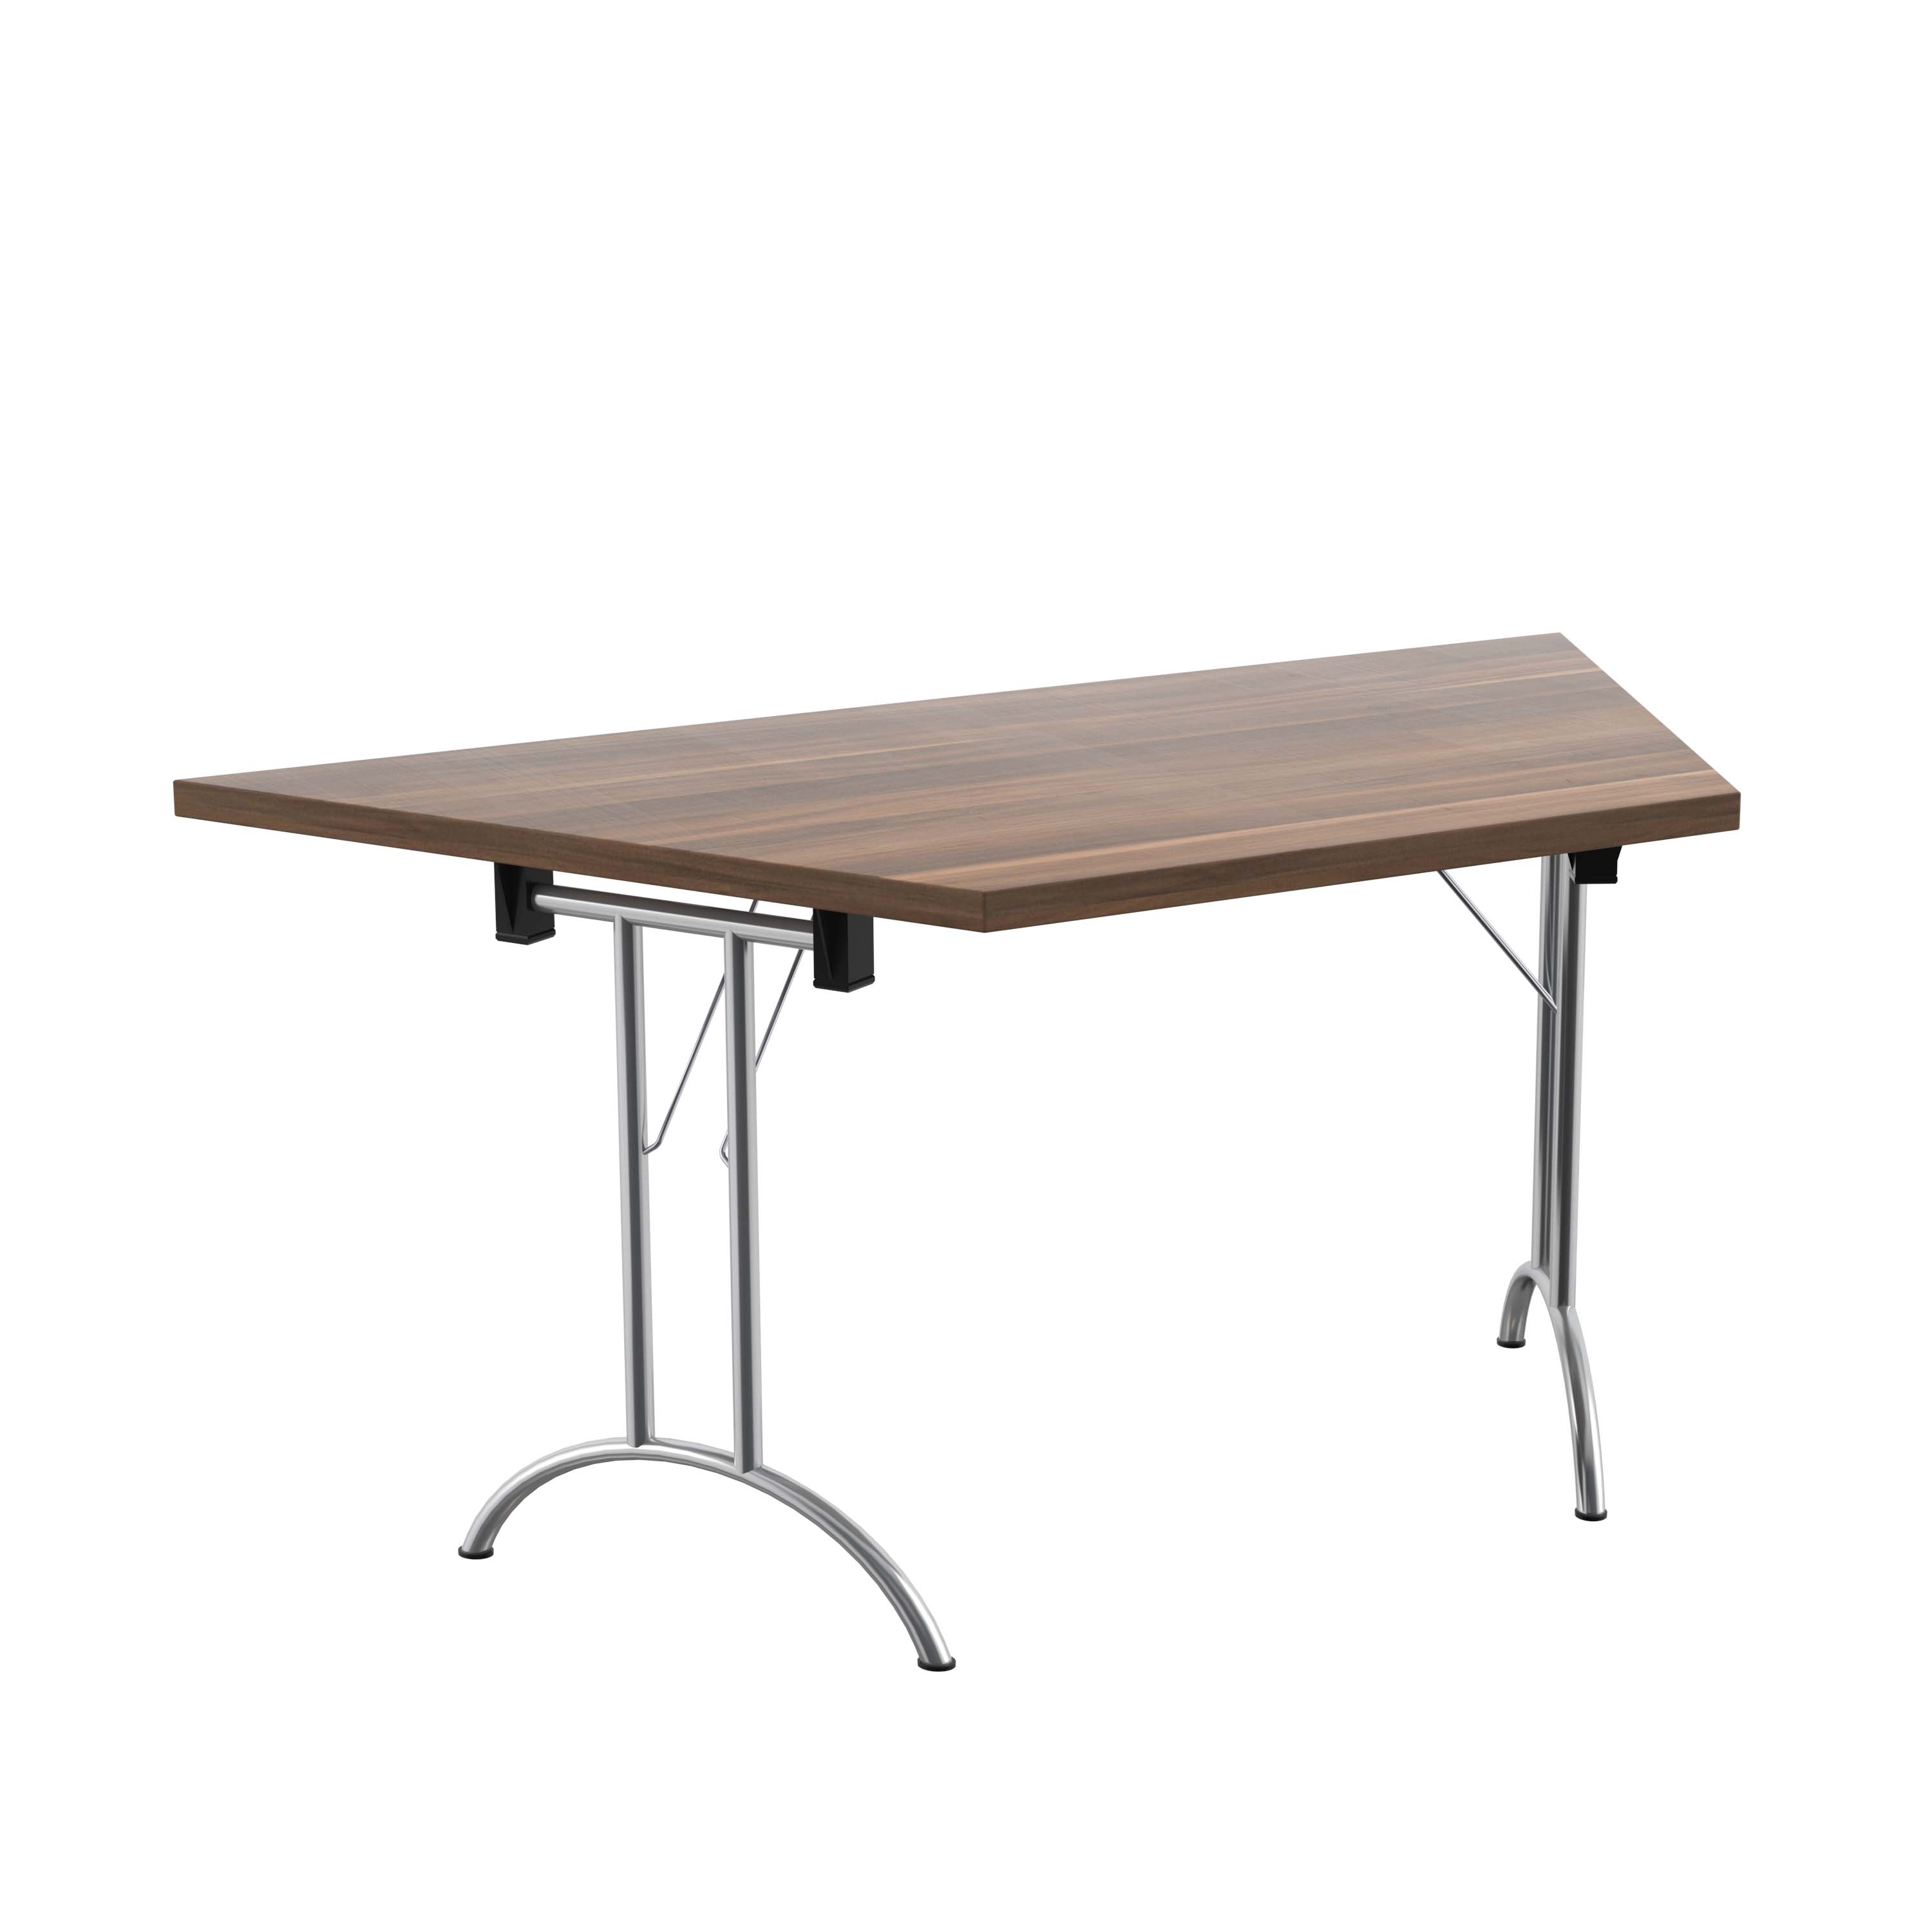 Union Folding Table Trapezoidal Top (FSC)